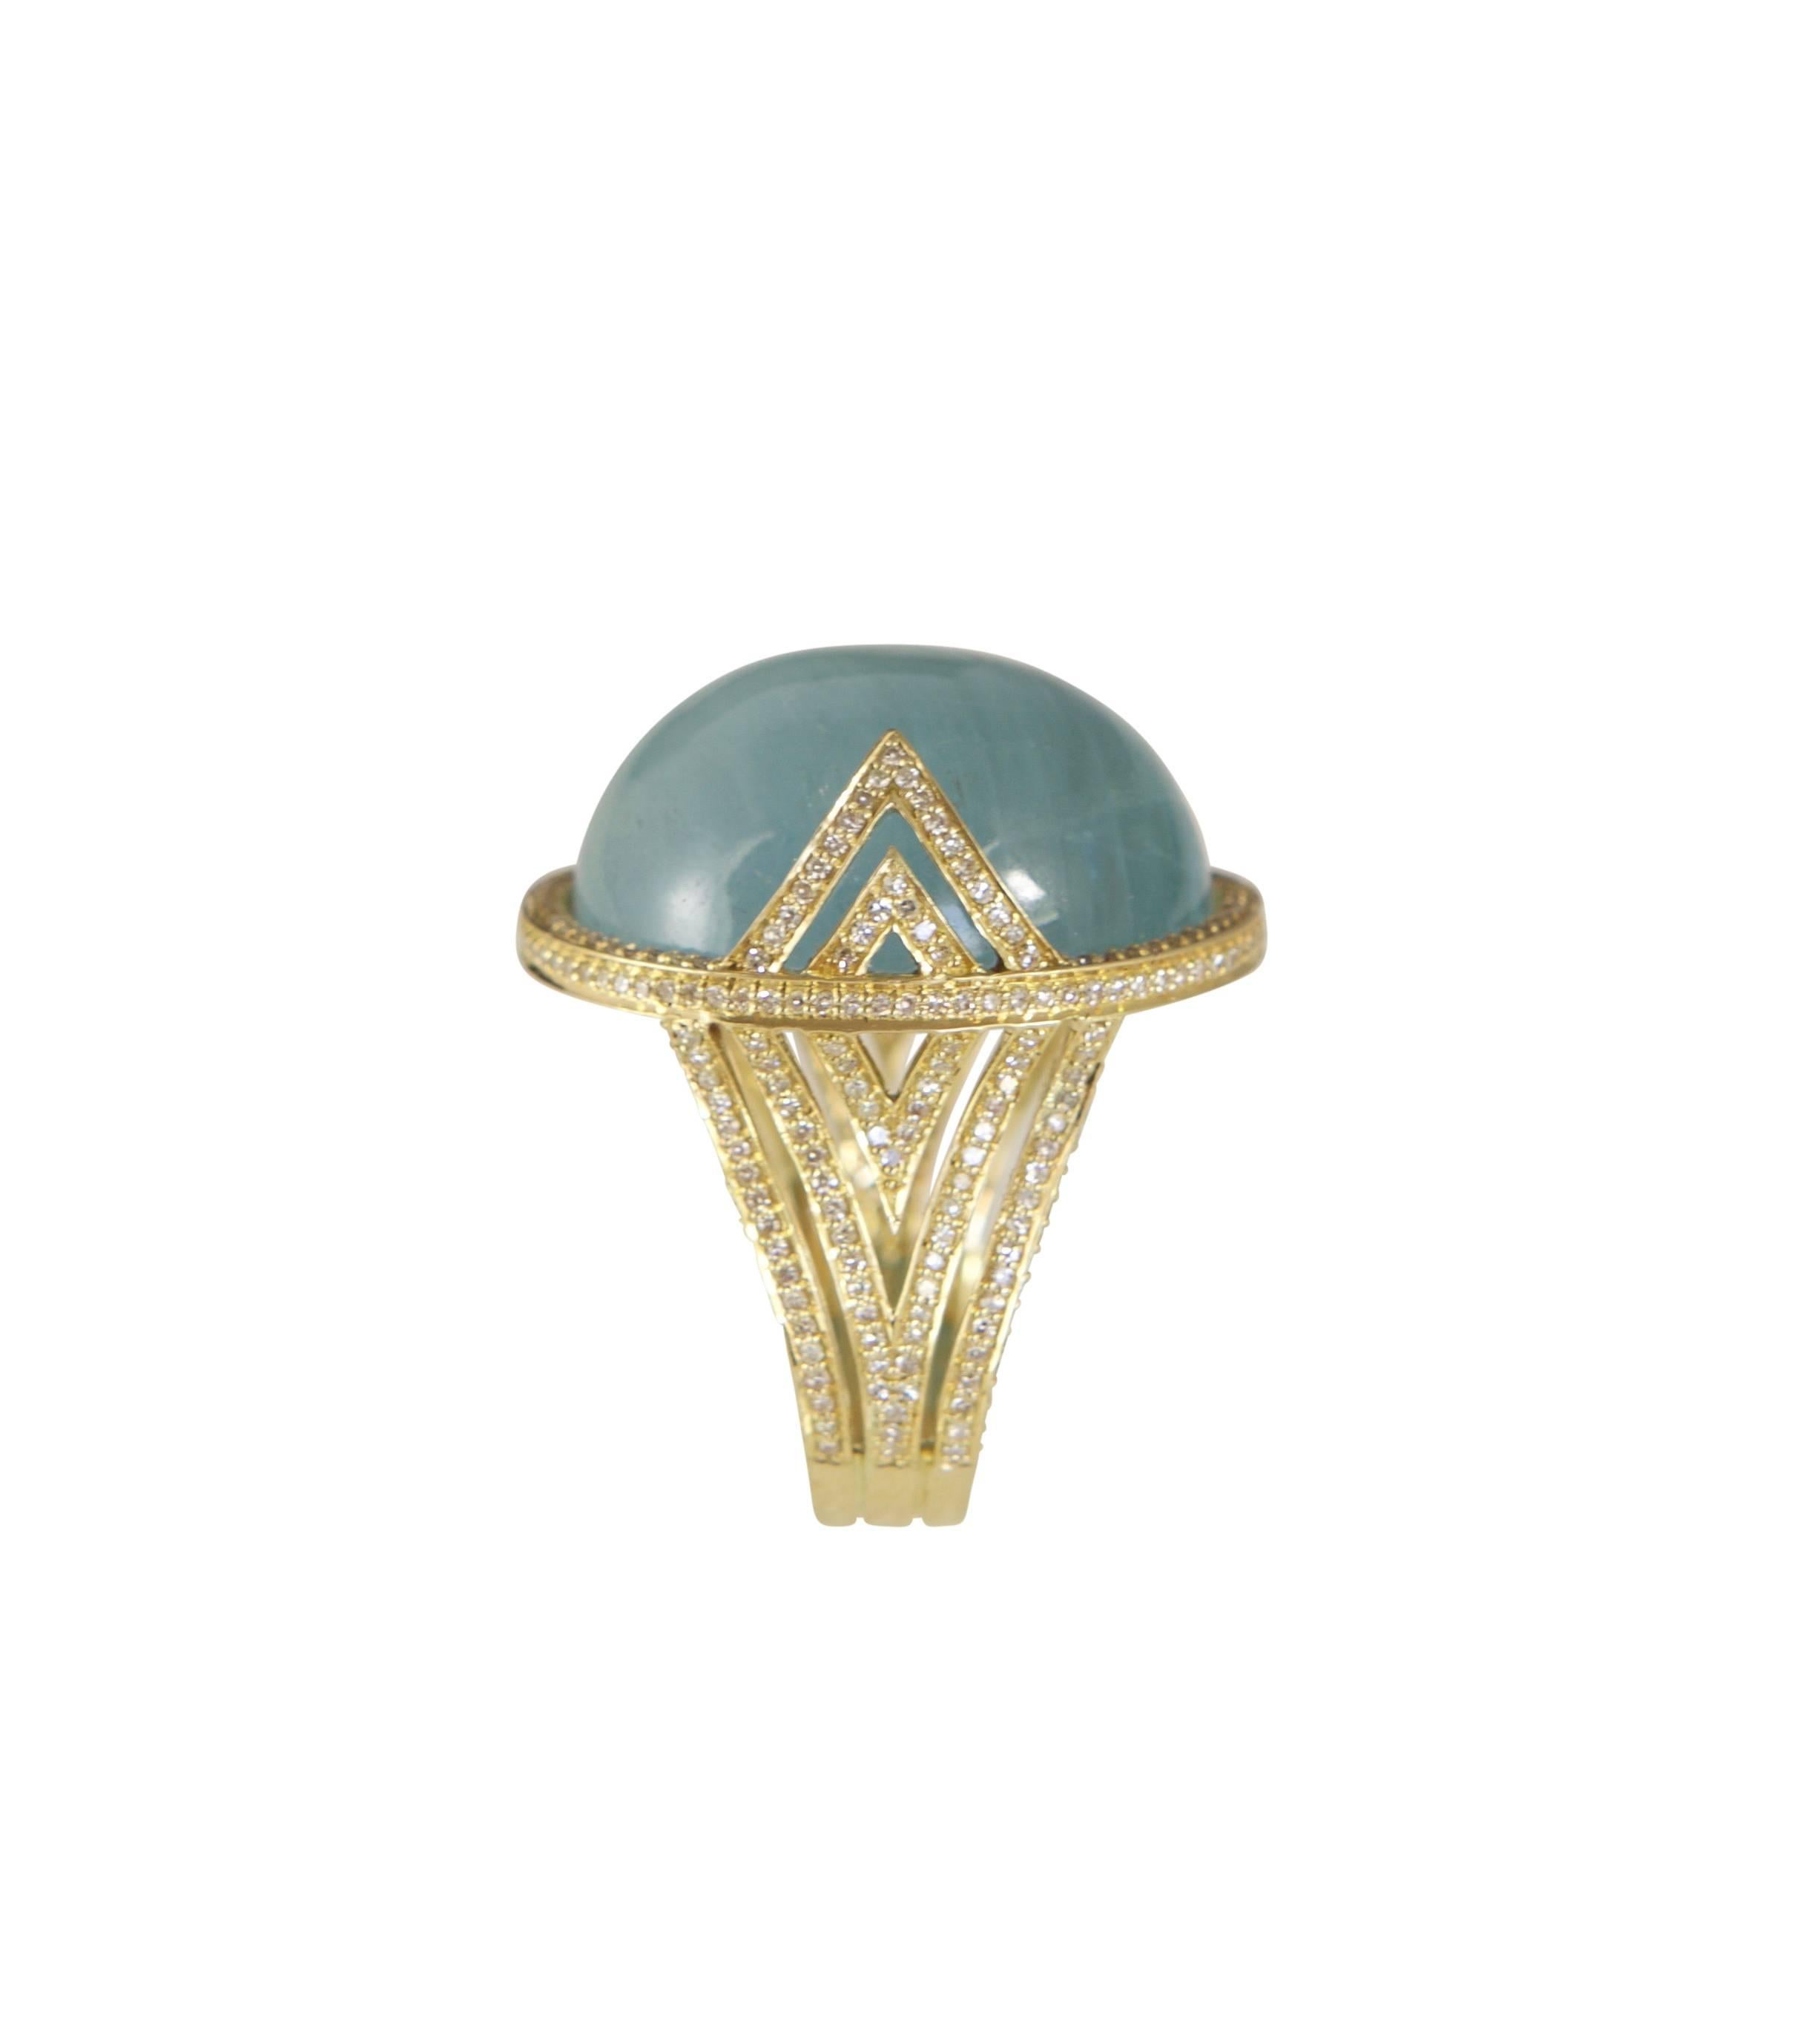 A Beautiful Aquamarine Cabochon and Diamond Ring in 18k Yellow Gold. 

Aquamarine 41.01 ct
Diamond 1.35 ct
